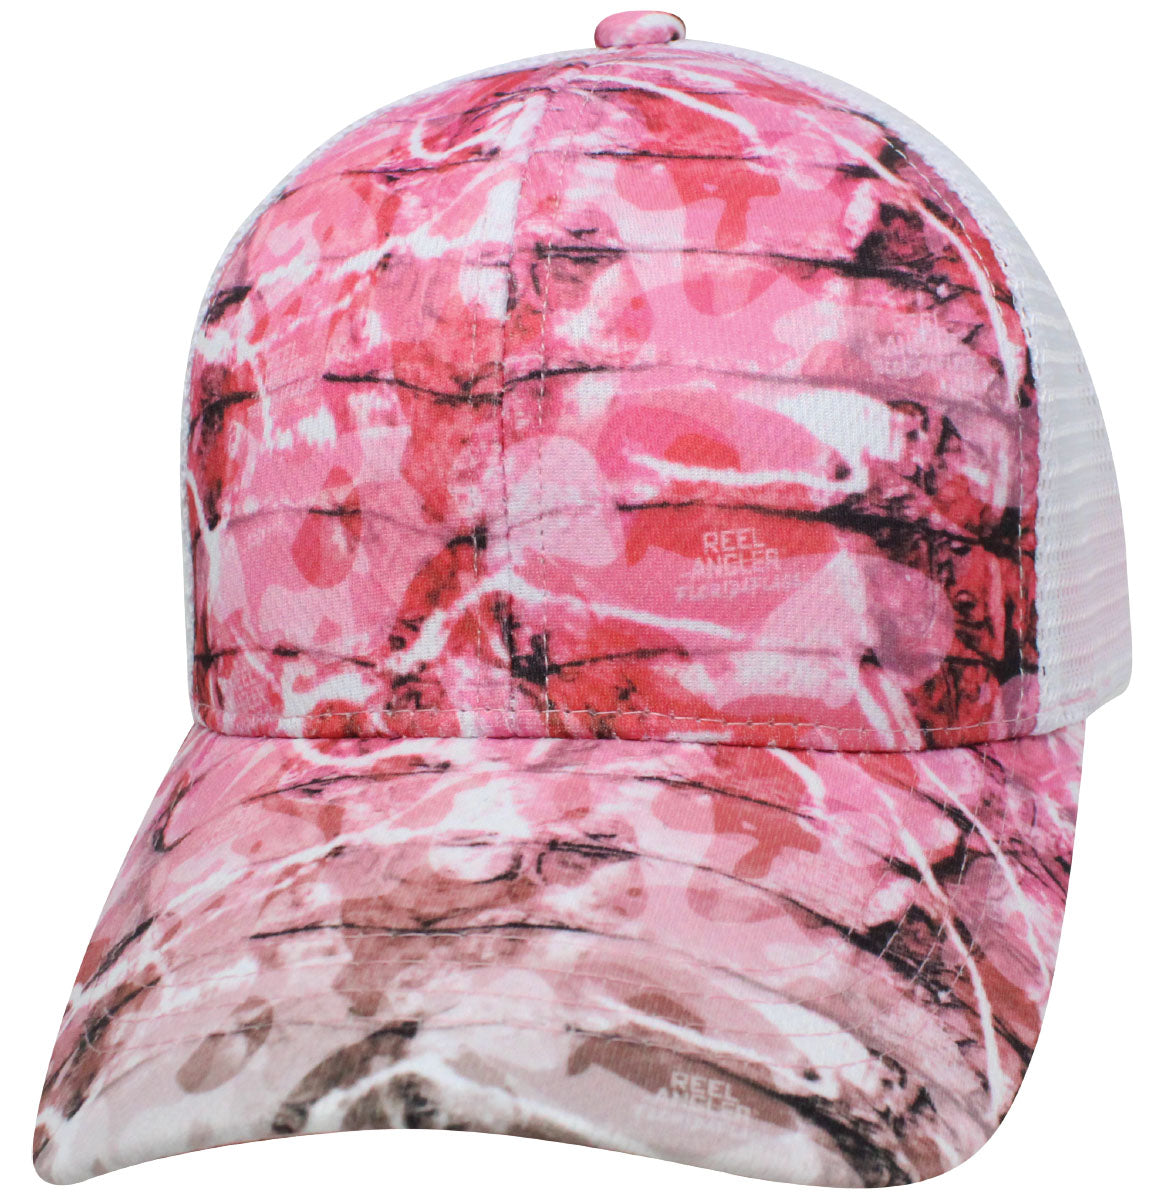 Reel Angler® Floridaflage™ Pink / White Mesh Back Blank Cap